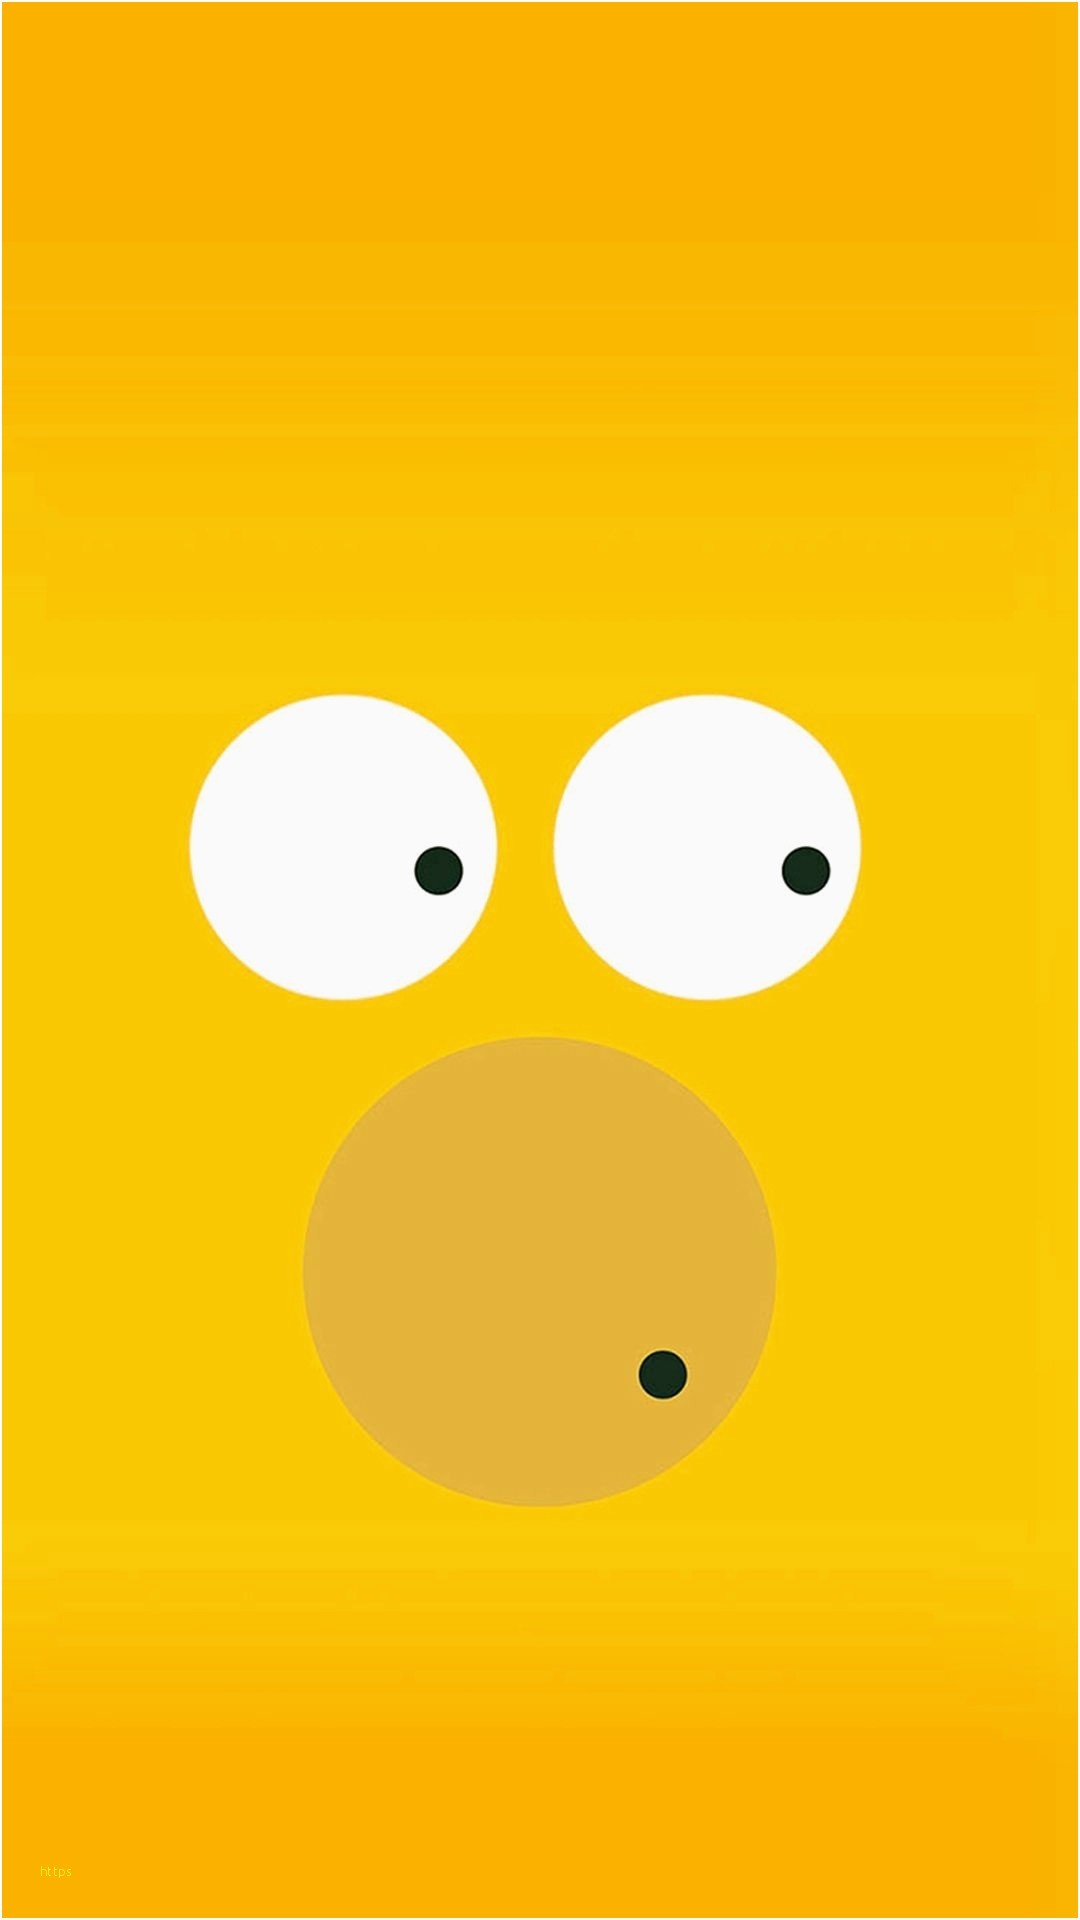 1080x1920 iPhone Wallpaper orange Luxury Funny Homer Simpson Minimal Illustration  iPhone 6 Wallpaper